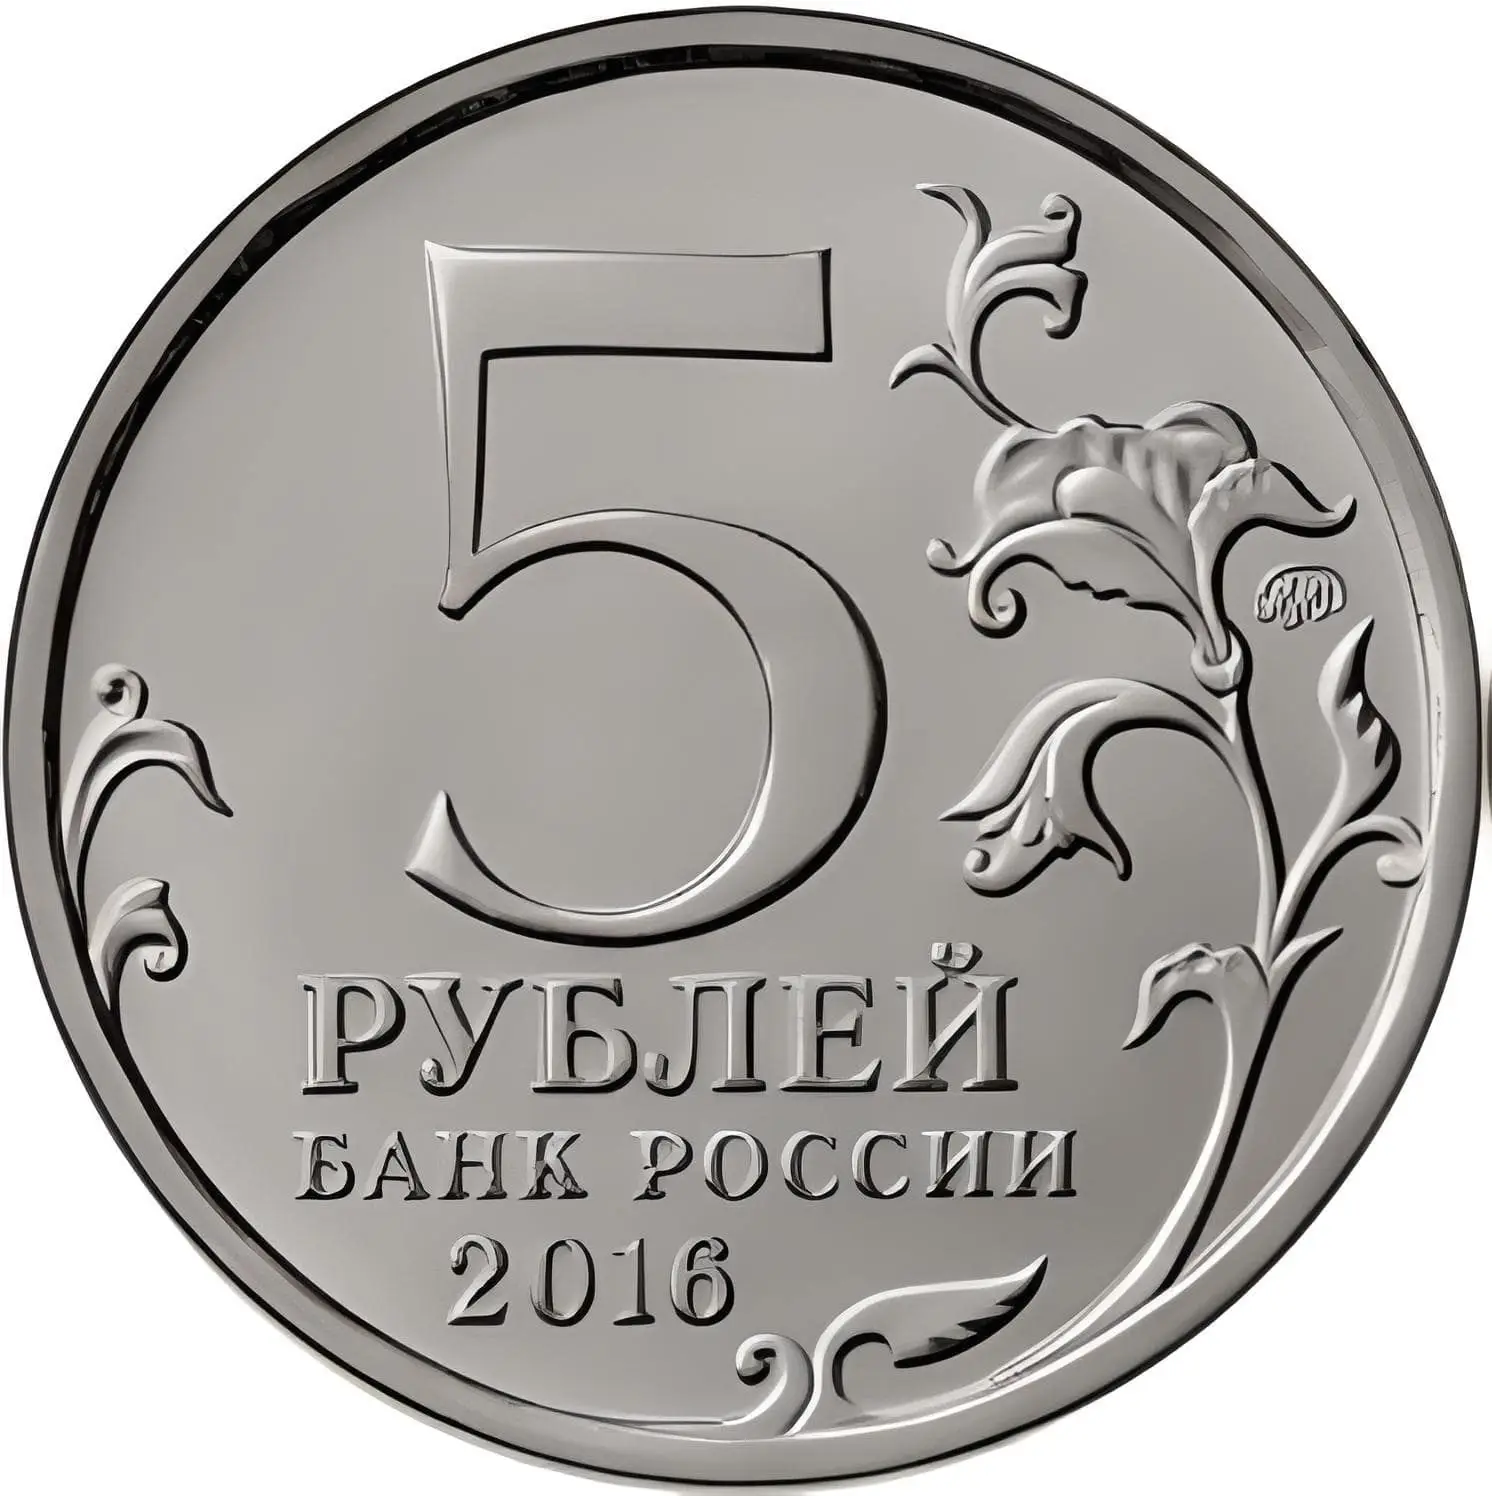 Цена 5 рублей со. Монета 5 рублей. Изображение 5 рублей. Монета 2 рубля на прозрачном фоне. Монета 5 руб для фотошопа.